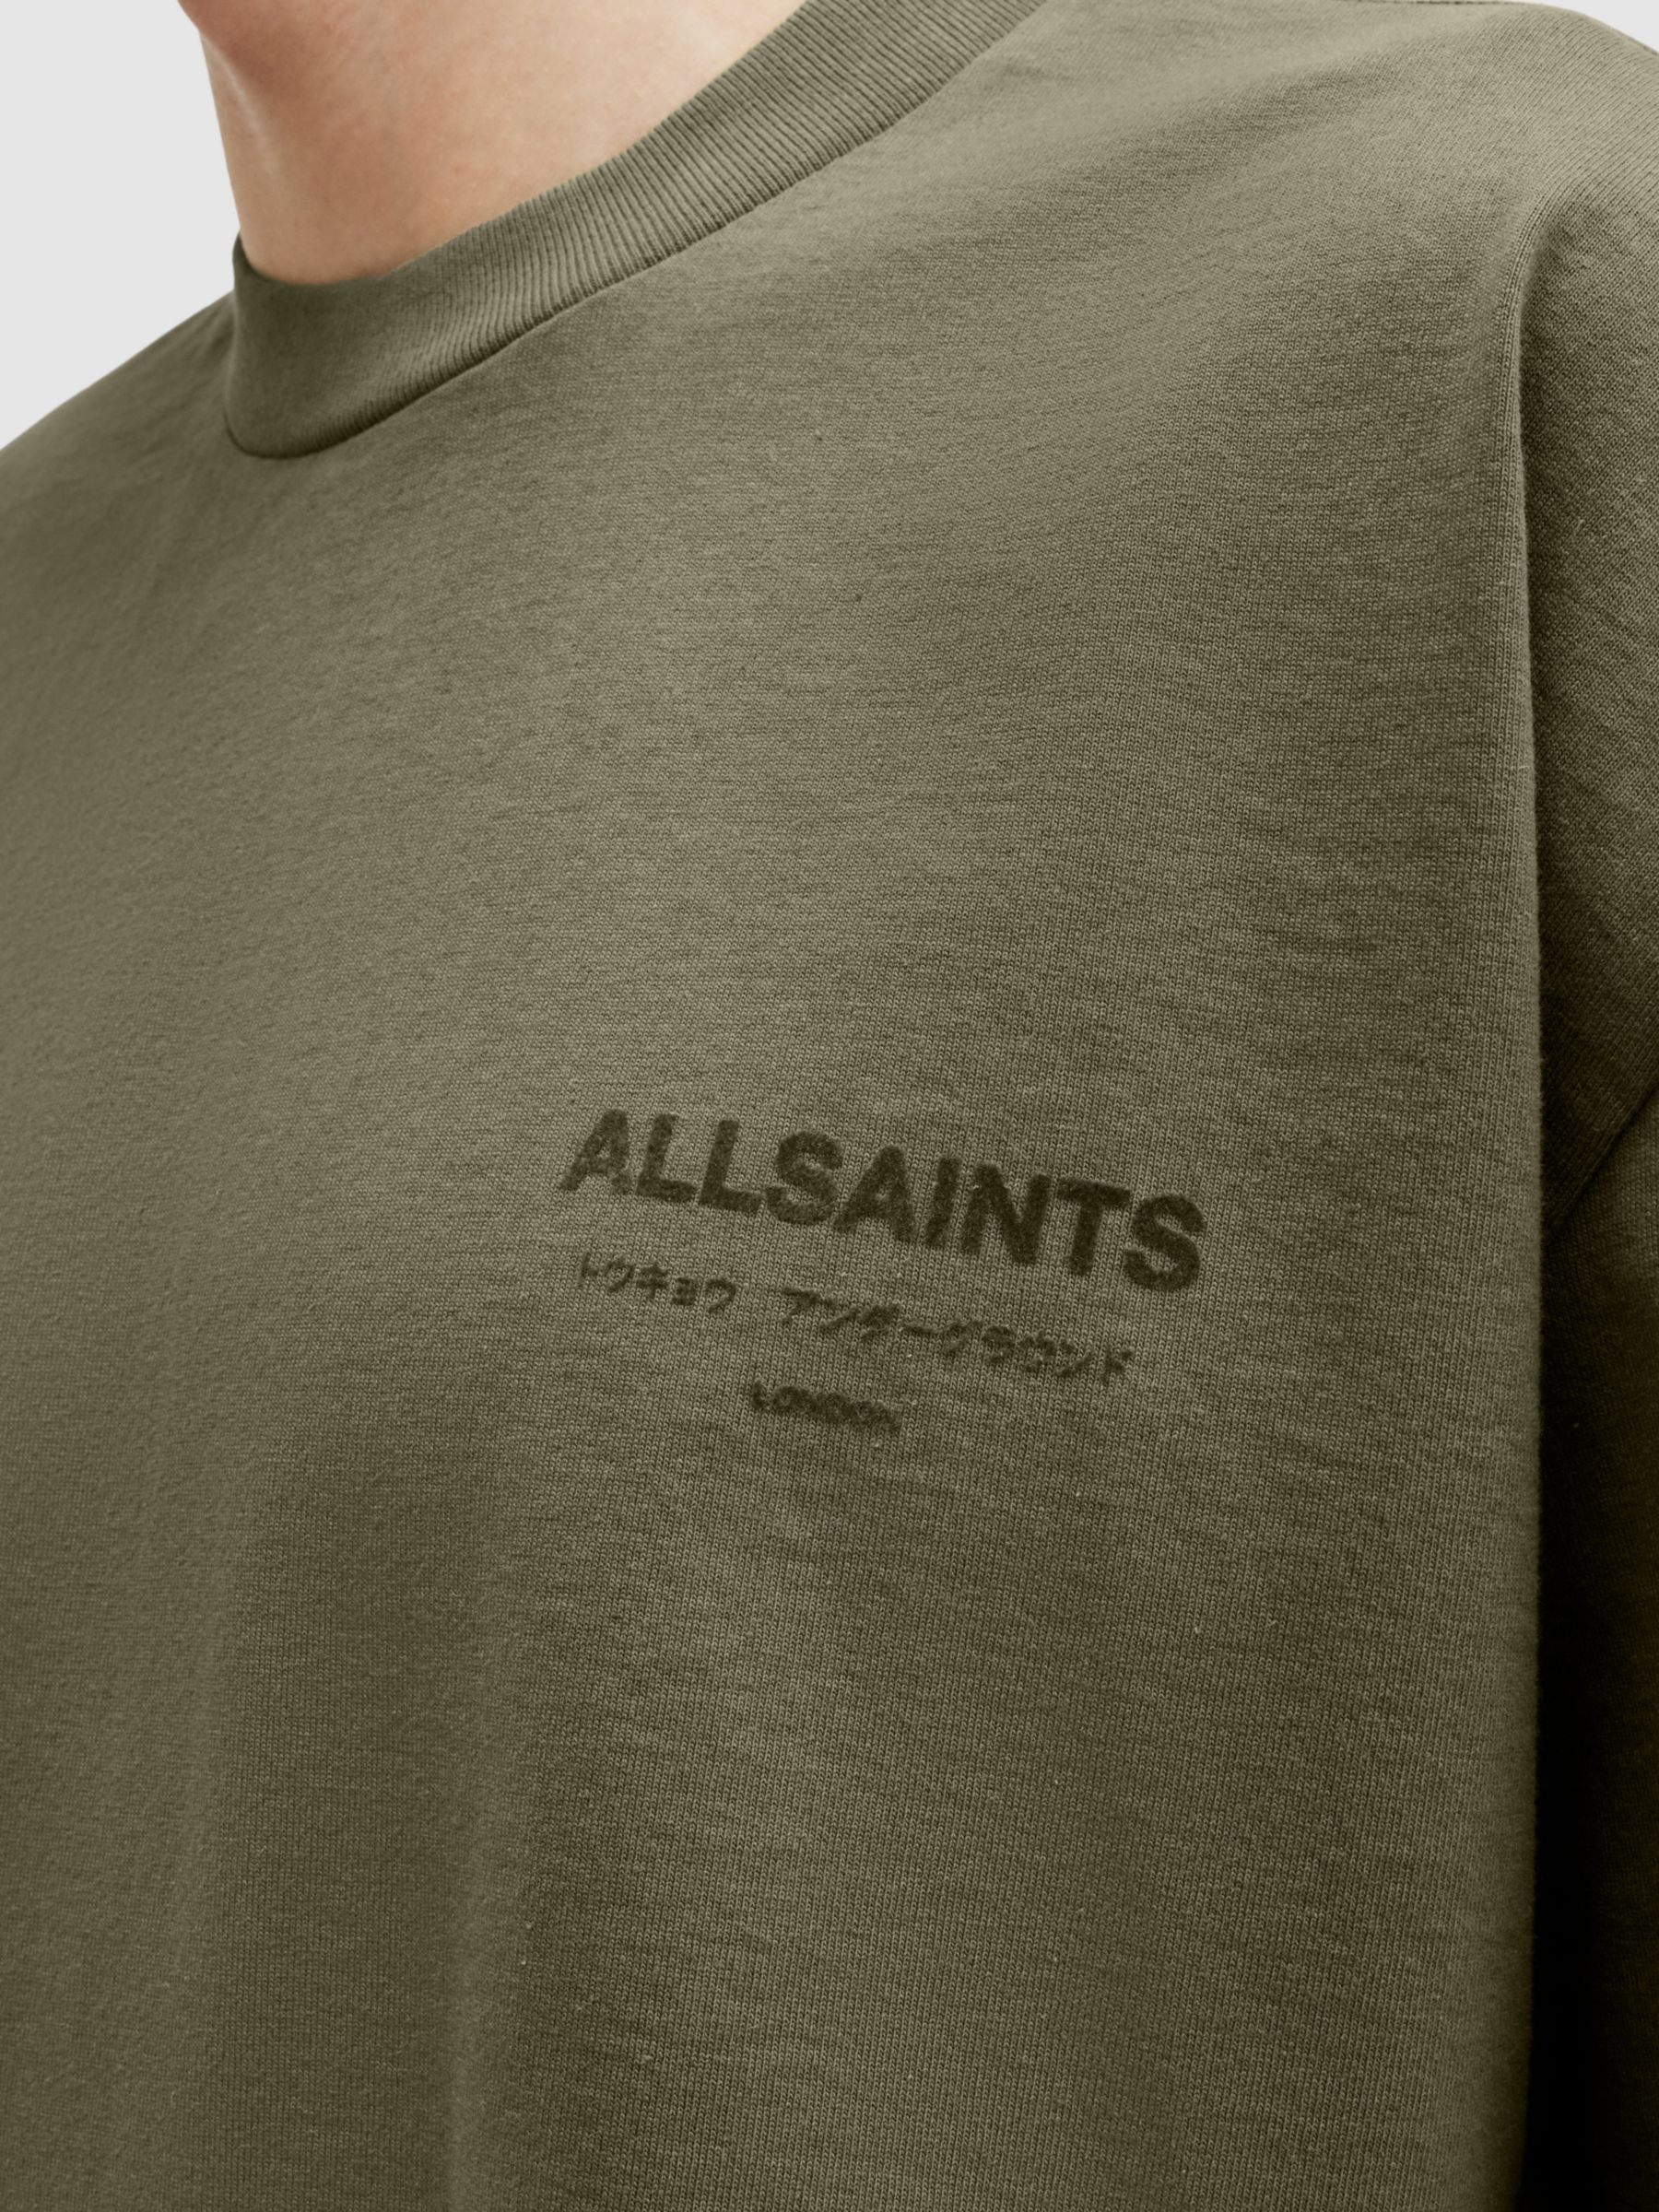 Buy AllSaints Xander Short Sleeve Crew T-Shirt Online at johnlewis.com